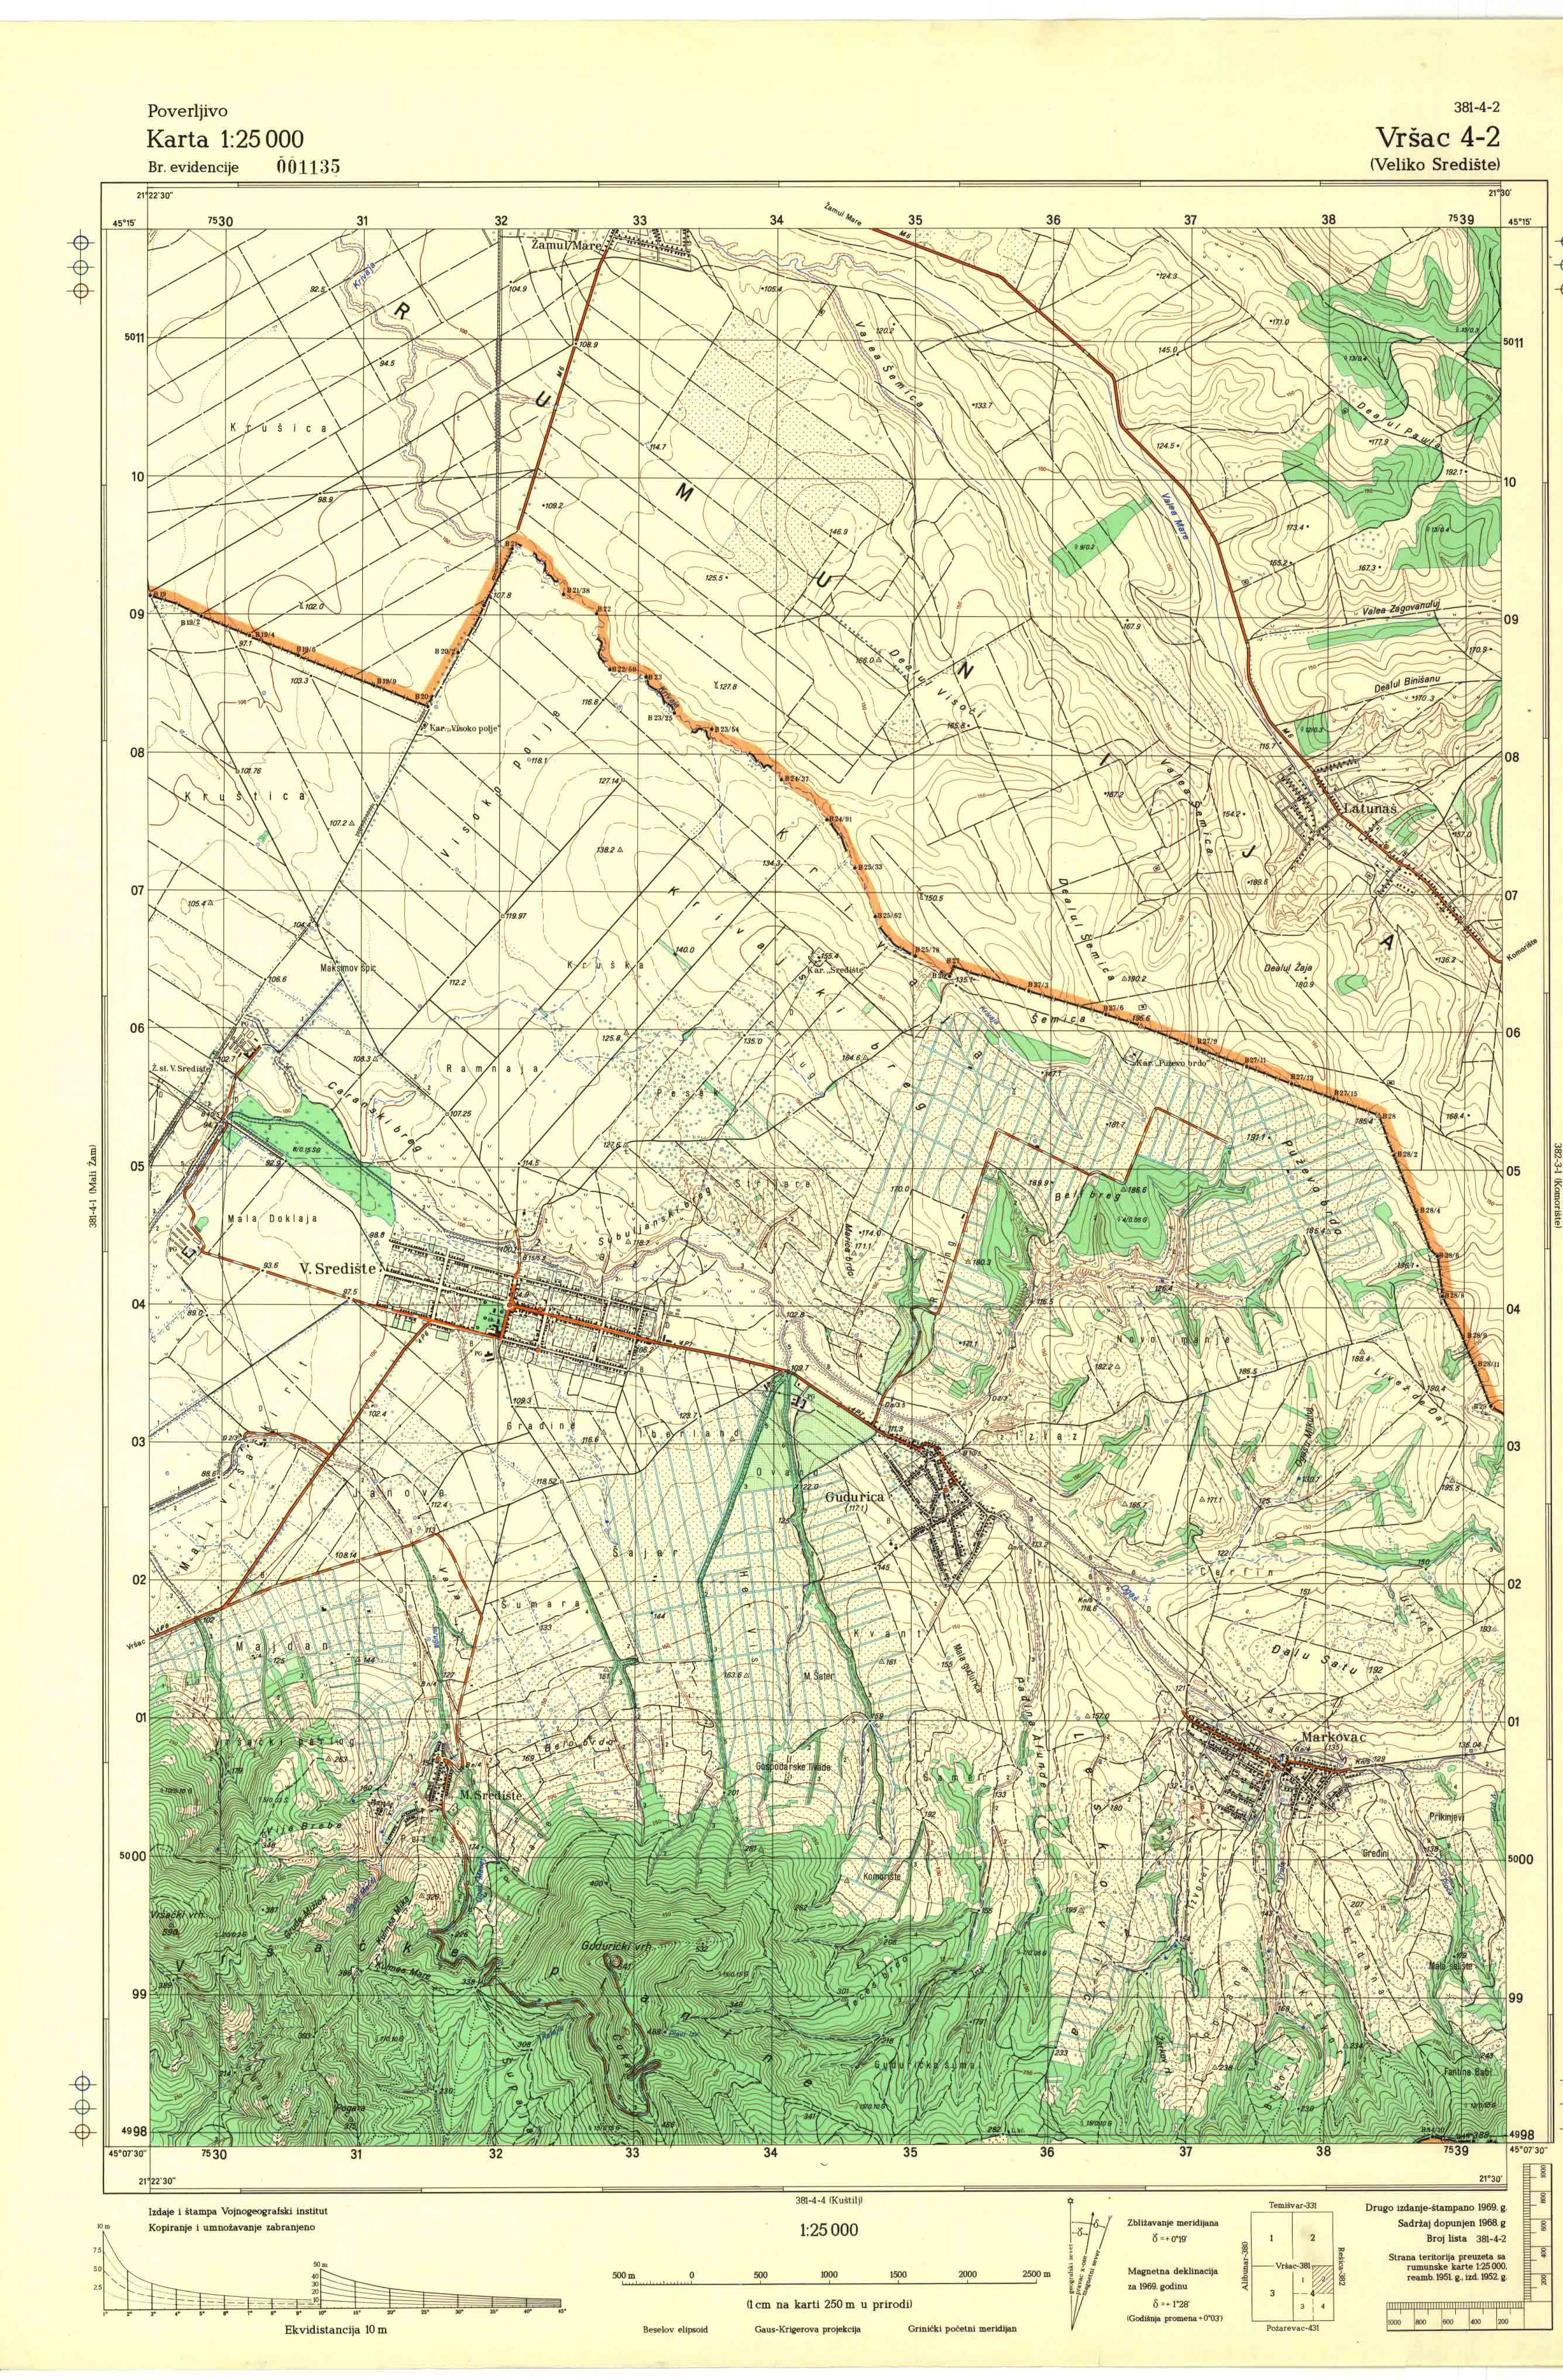  topografska karta srbije 25000 JNA  Vršac